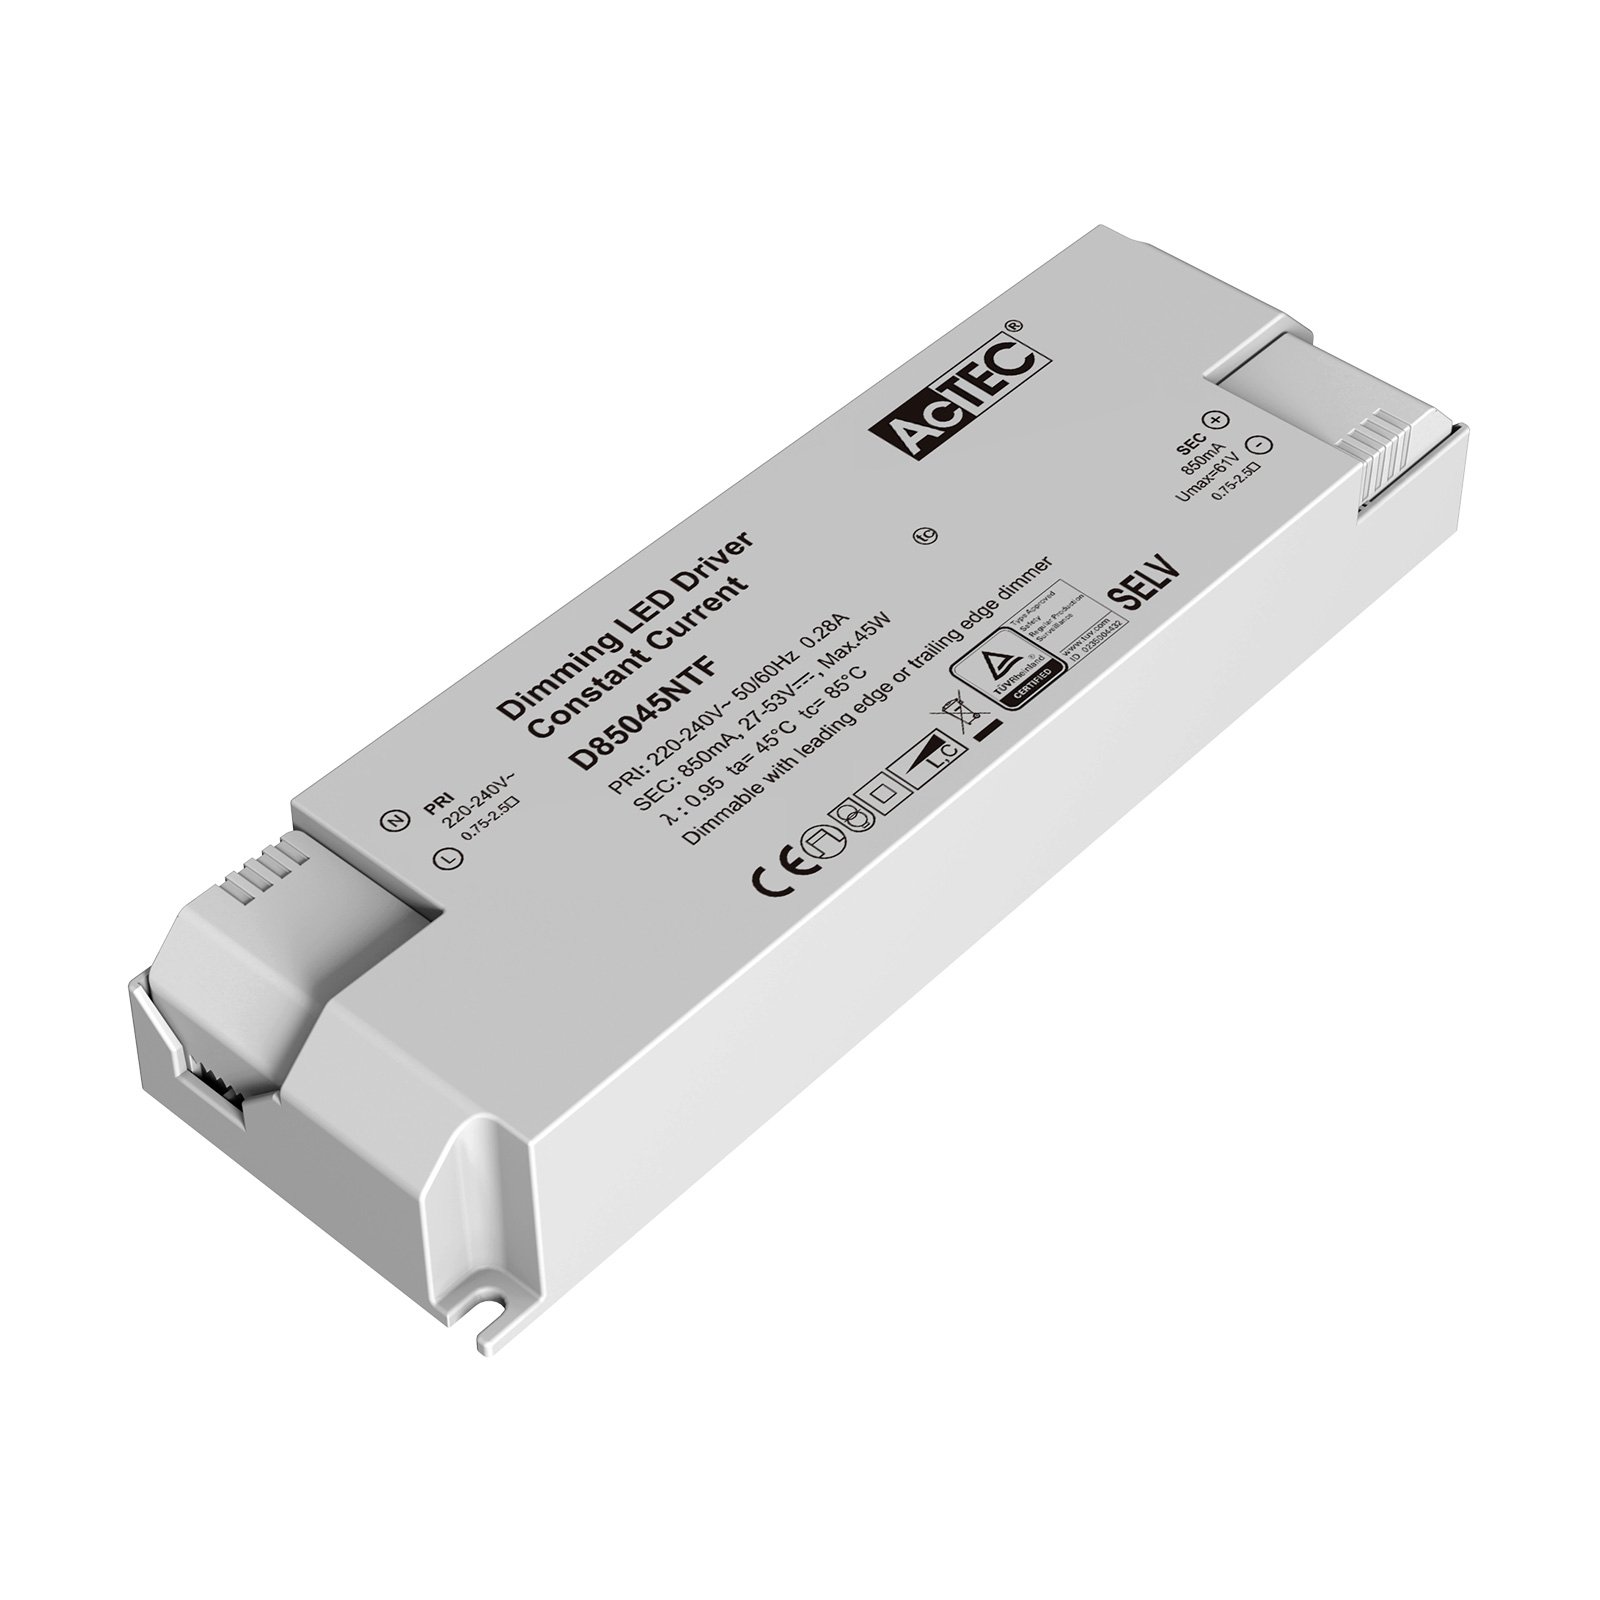 AcTEC Triac LED vezérlő CC max. 45W 850mA